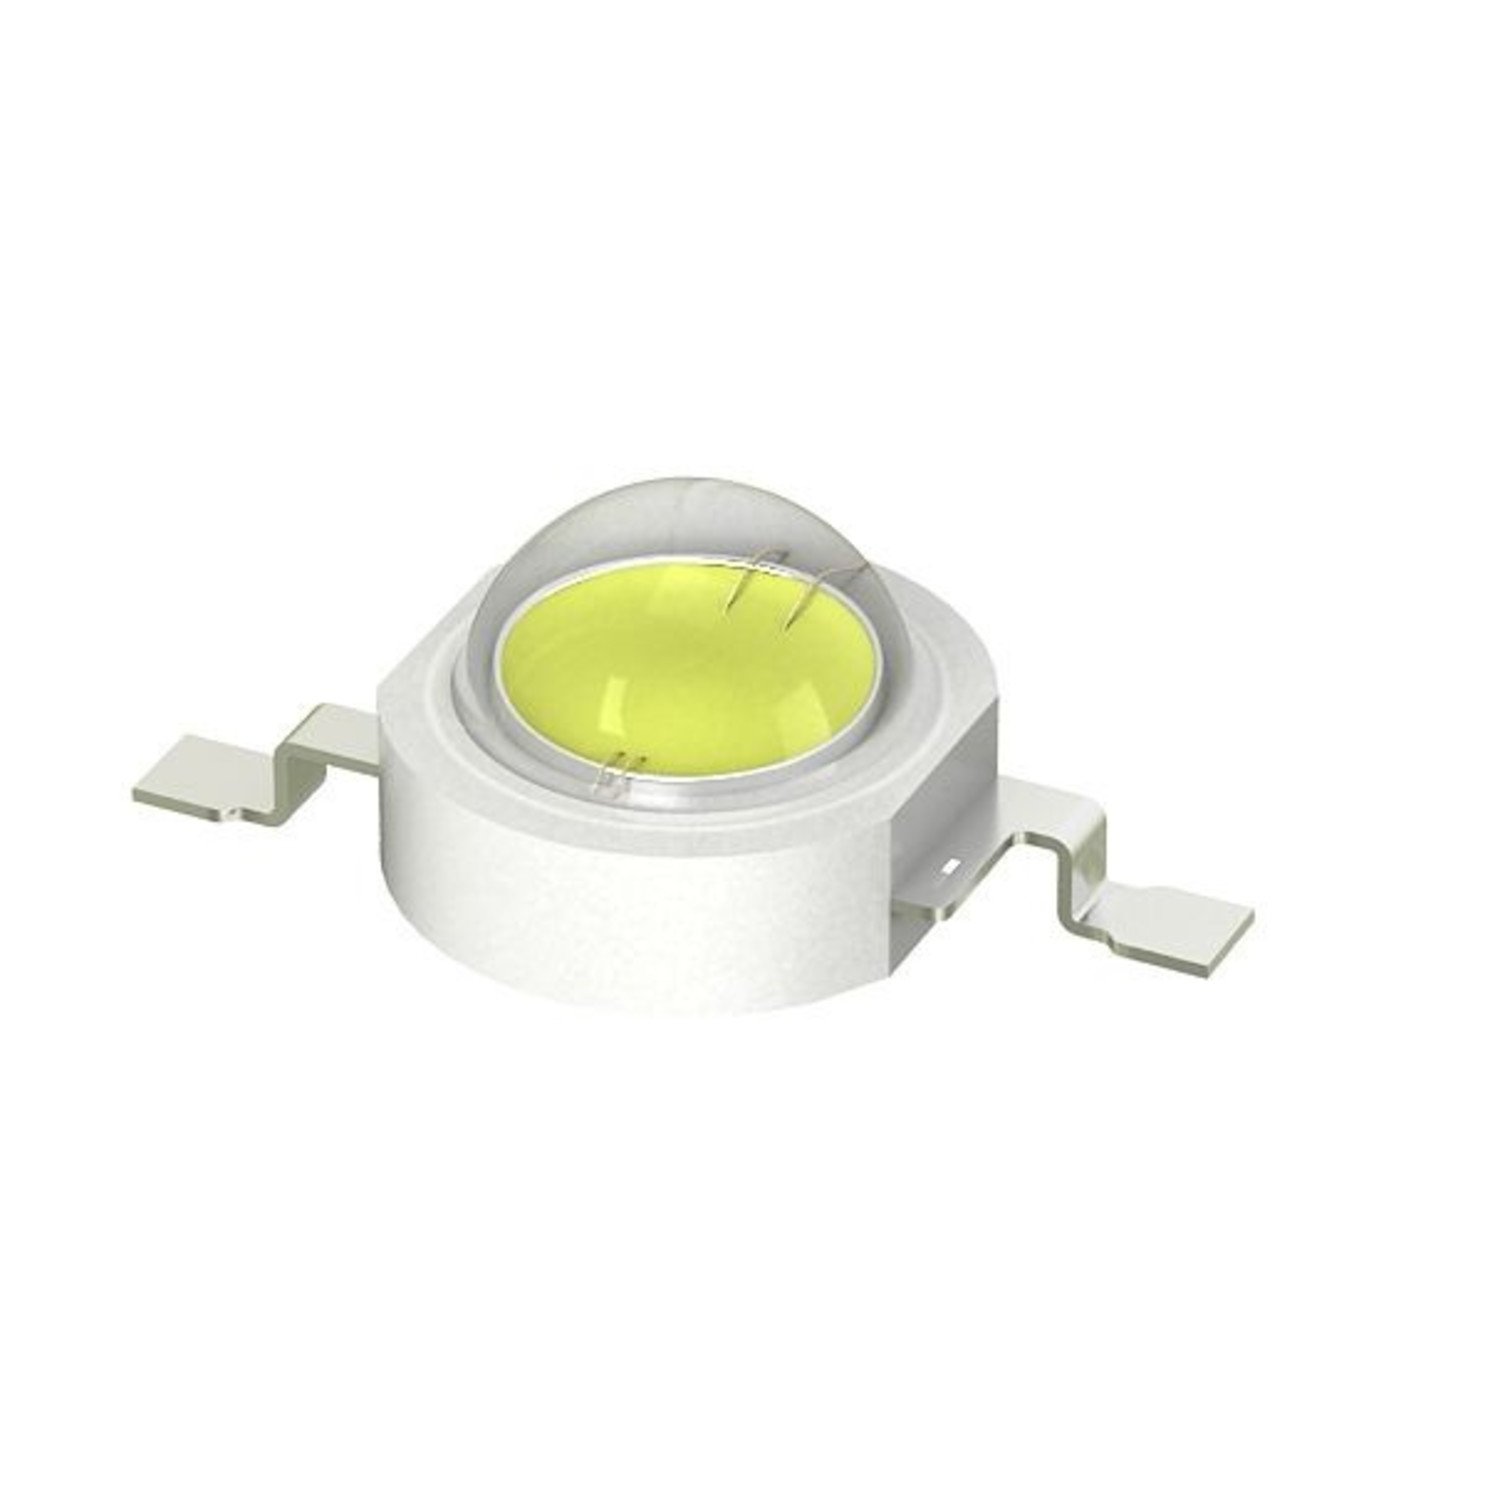 10x Diode LED Transparente 5mm Jaune 2V - Otronic